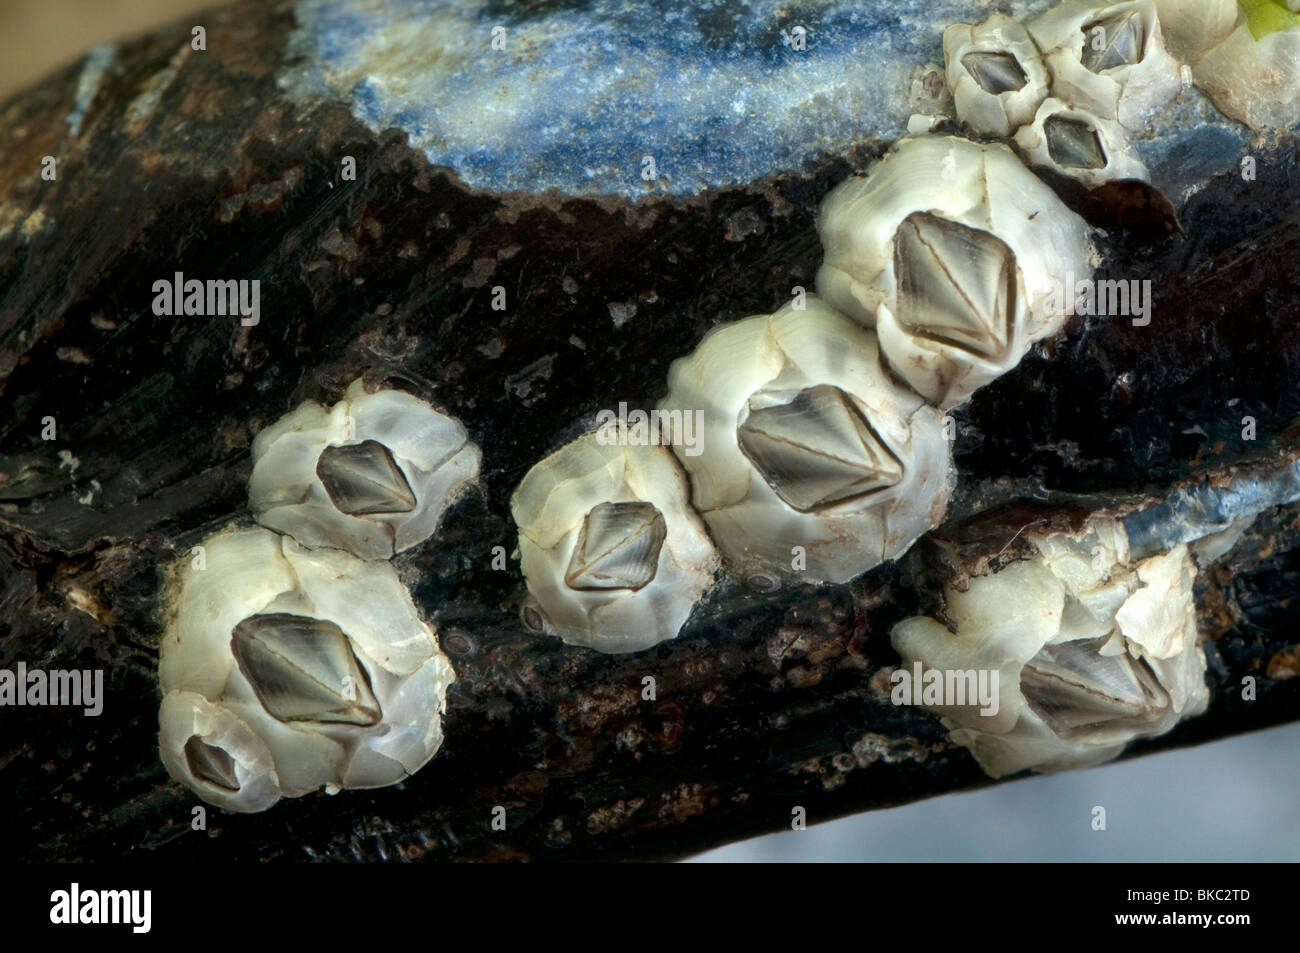 Australian barnacle (Elminius modestus) on a mussel shell. Stock Photo